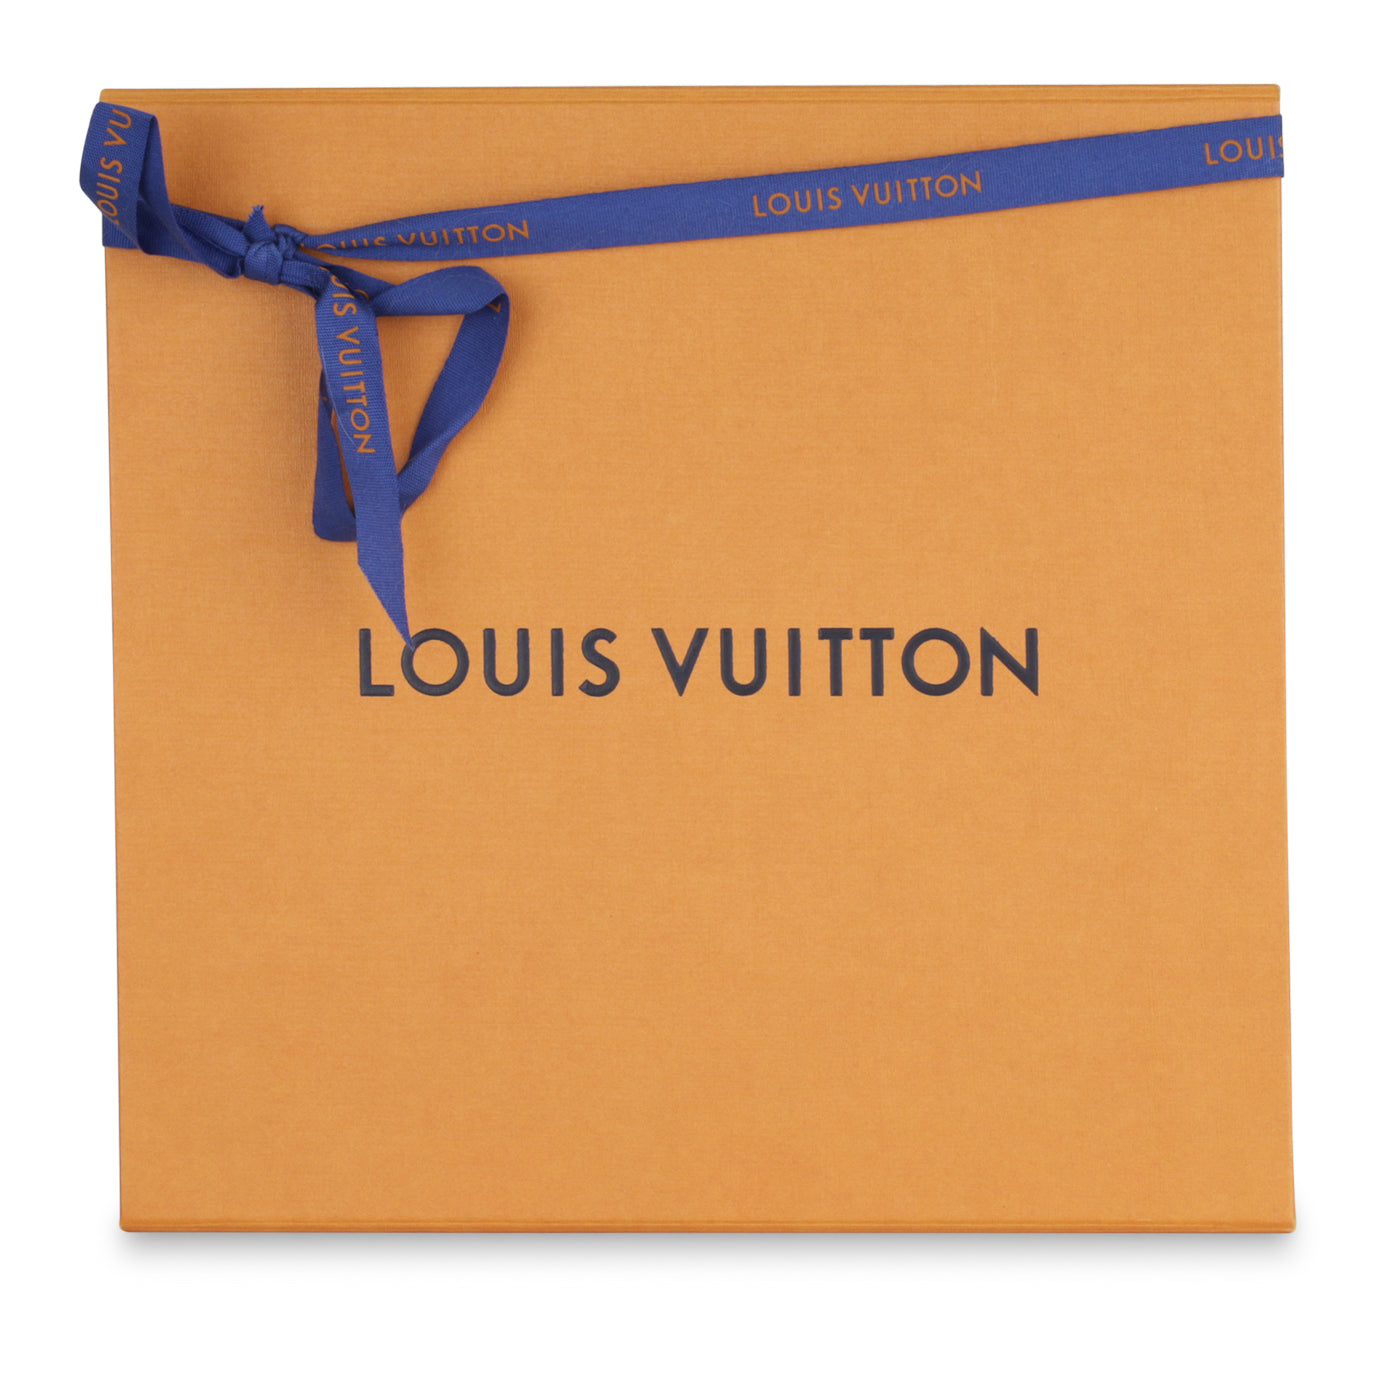 Louis Vuitton Monogram Utility Crossbody – DAC